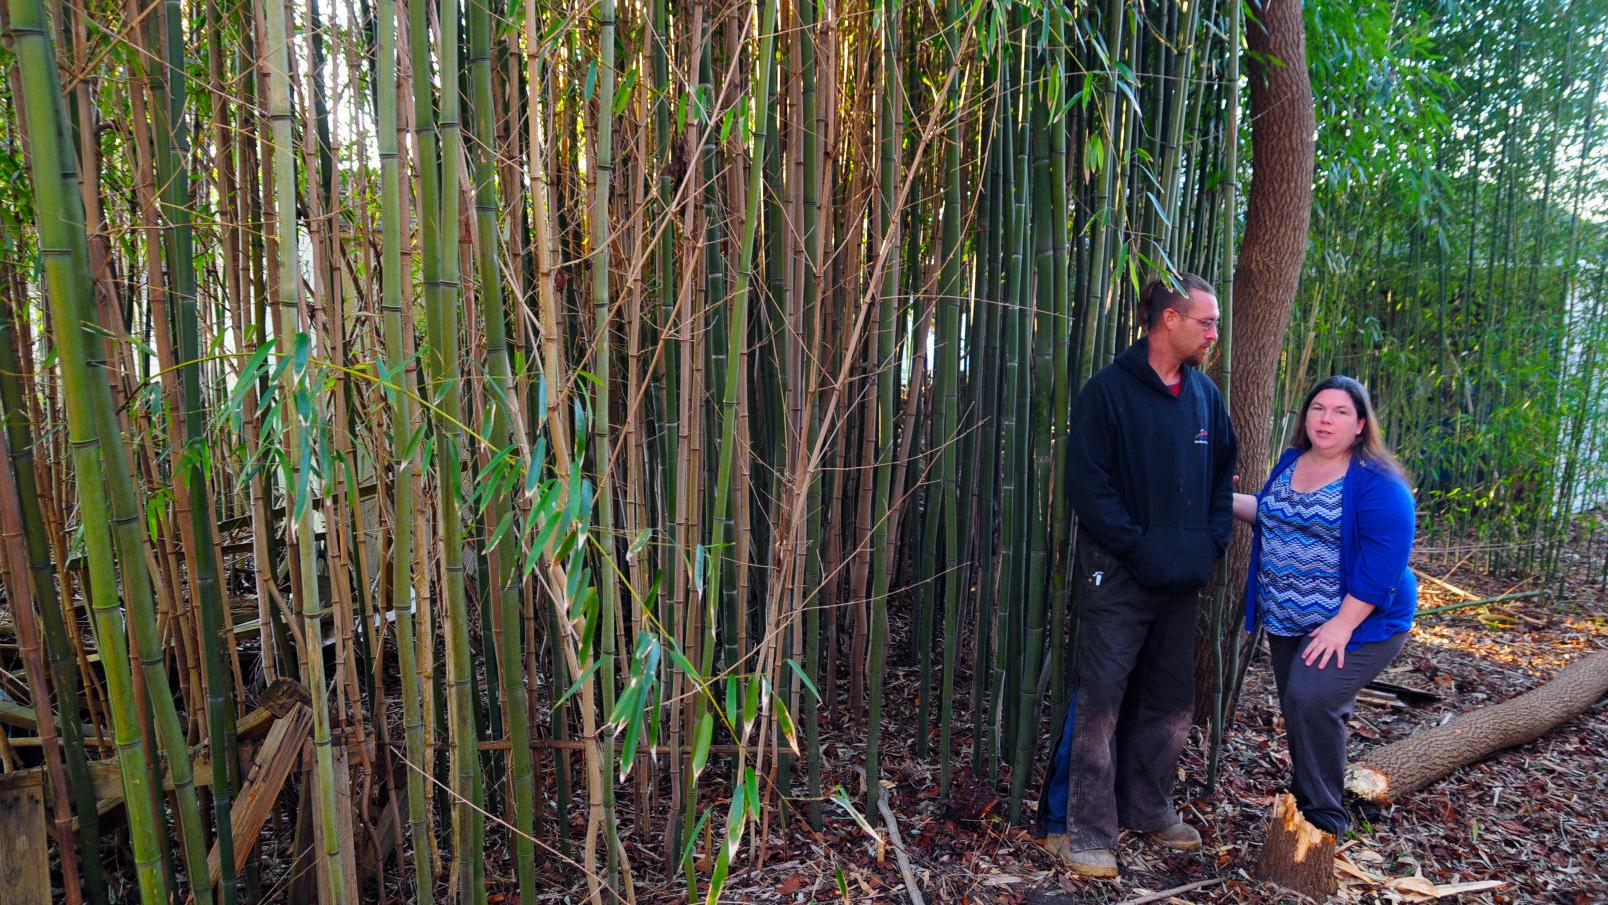 Homeowners Face Major Costs Removing Bamboo From Neighbors Yards Latest Headlines Pressofatlanticcity Com,Kimchi Recipe With Apple